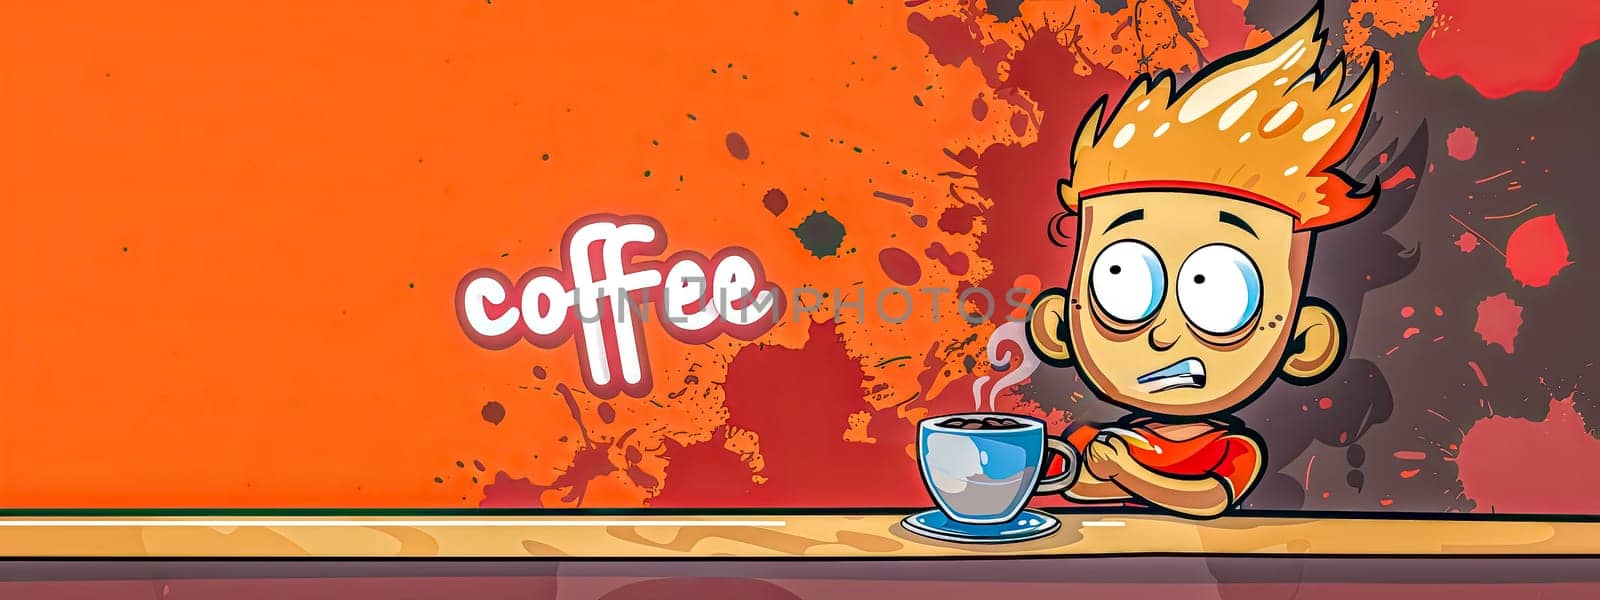 Sleepy cartoon character with morning coffee by Edophoto